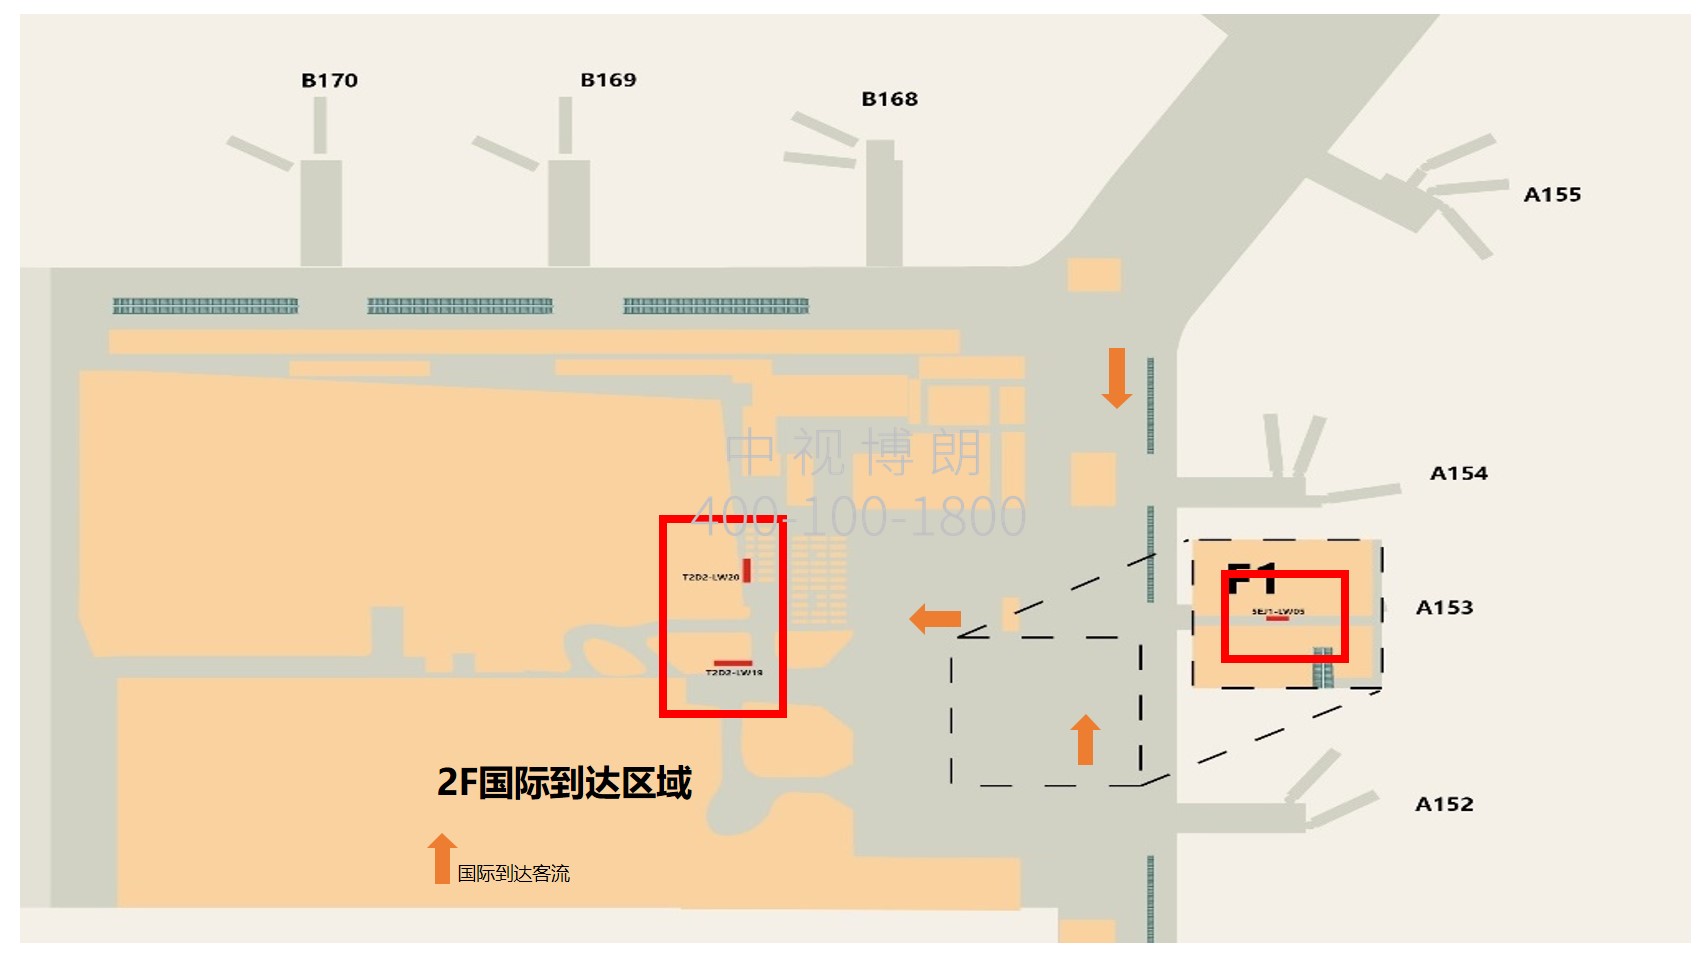 Guangzhou Airport Advertising-T2国际到达海关后方灯箱套装2点位图